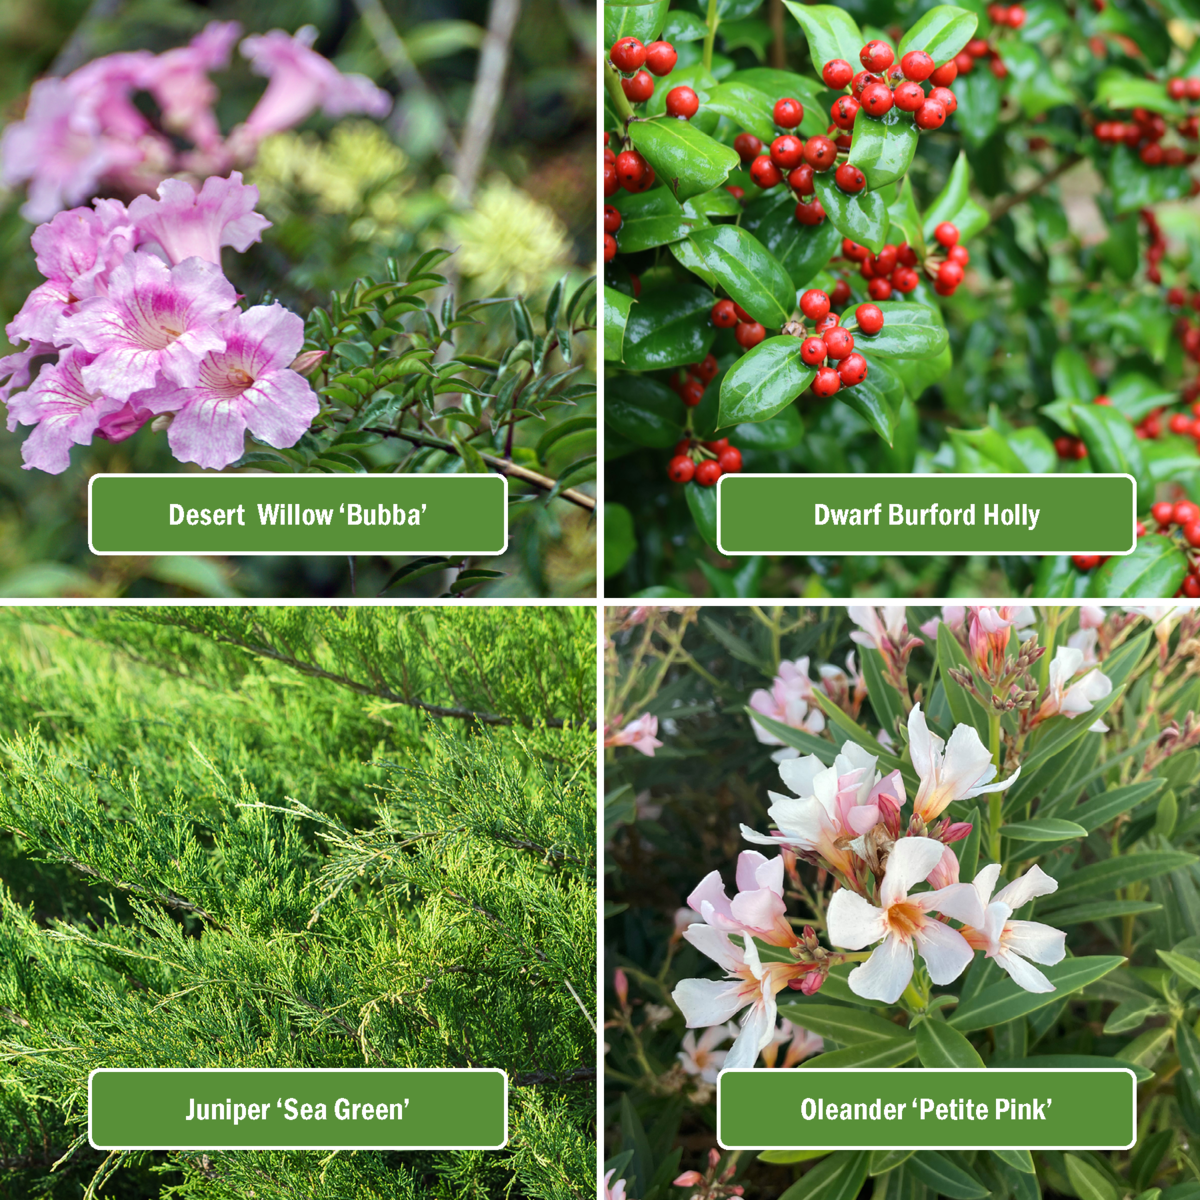 Plant list includes: Desert Willow Bubba, Dward Burford Holly, Oleander Petite Pink, Juniper Sea Green.